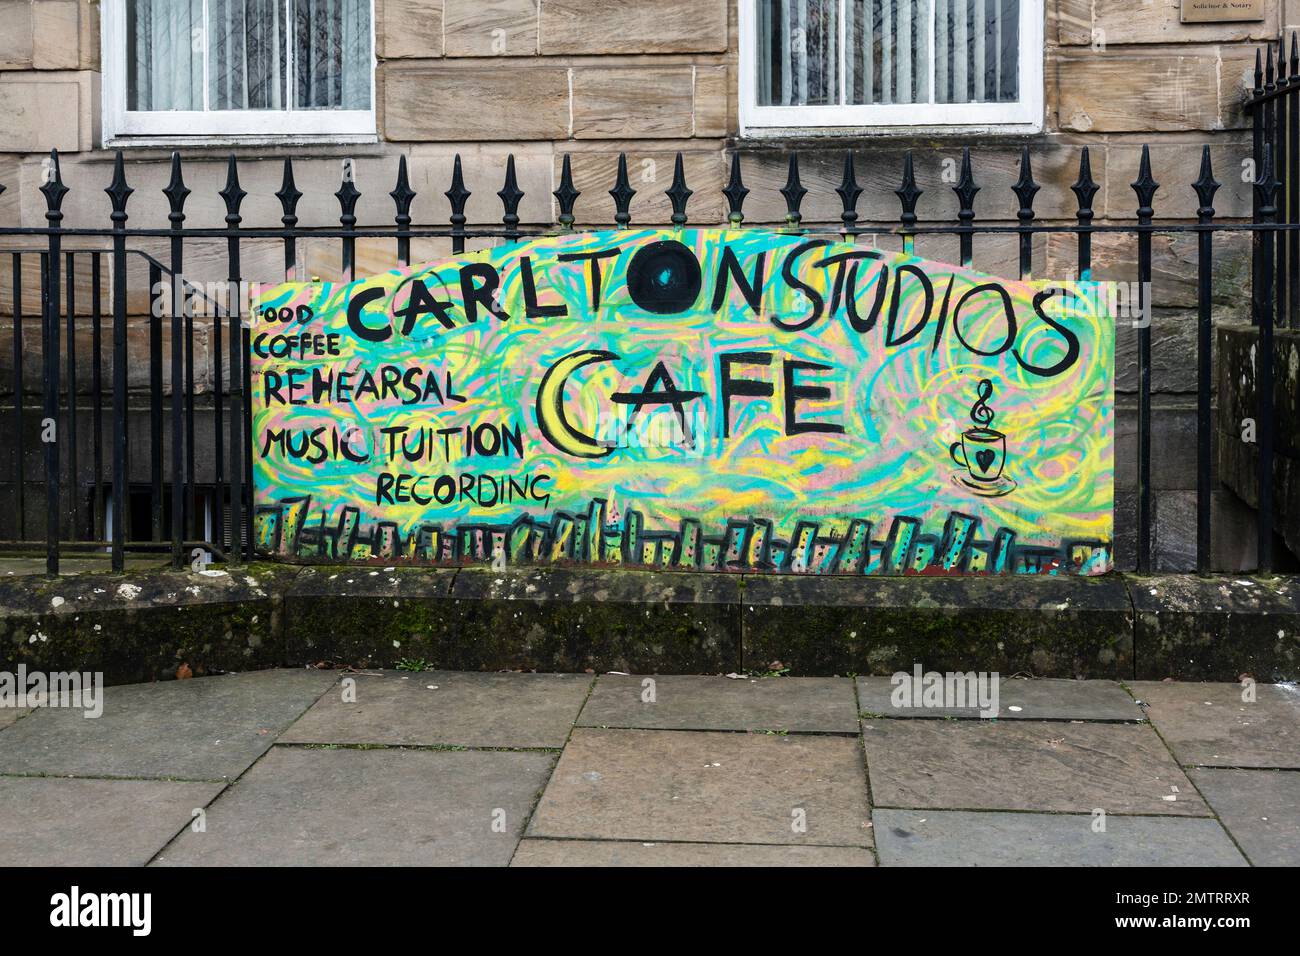 Carlton Studios and Cafe Sign, Carlton place, Glasgow, Écosse, Royaume-Uni, Europe Banque D'Images